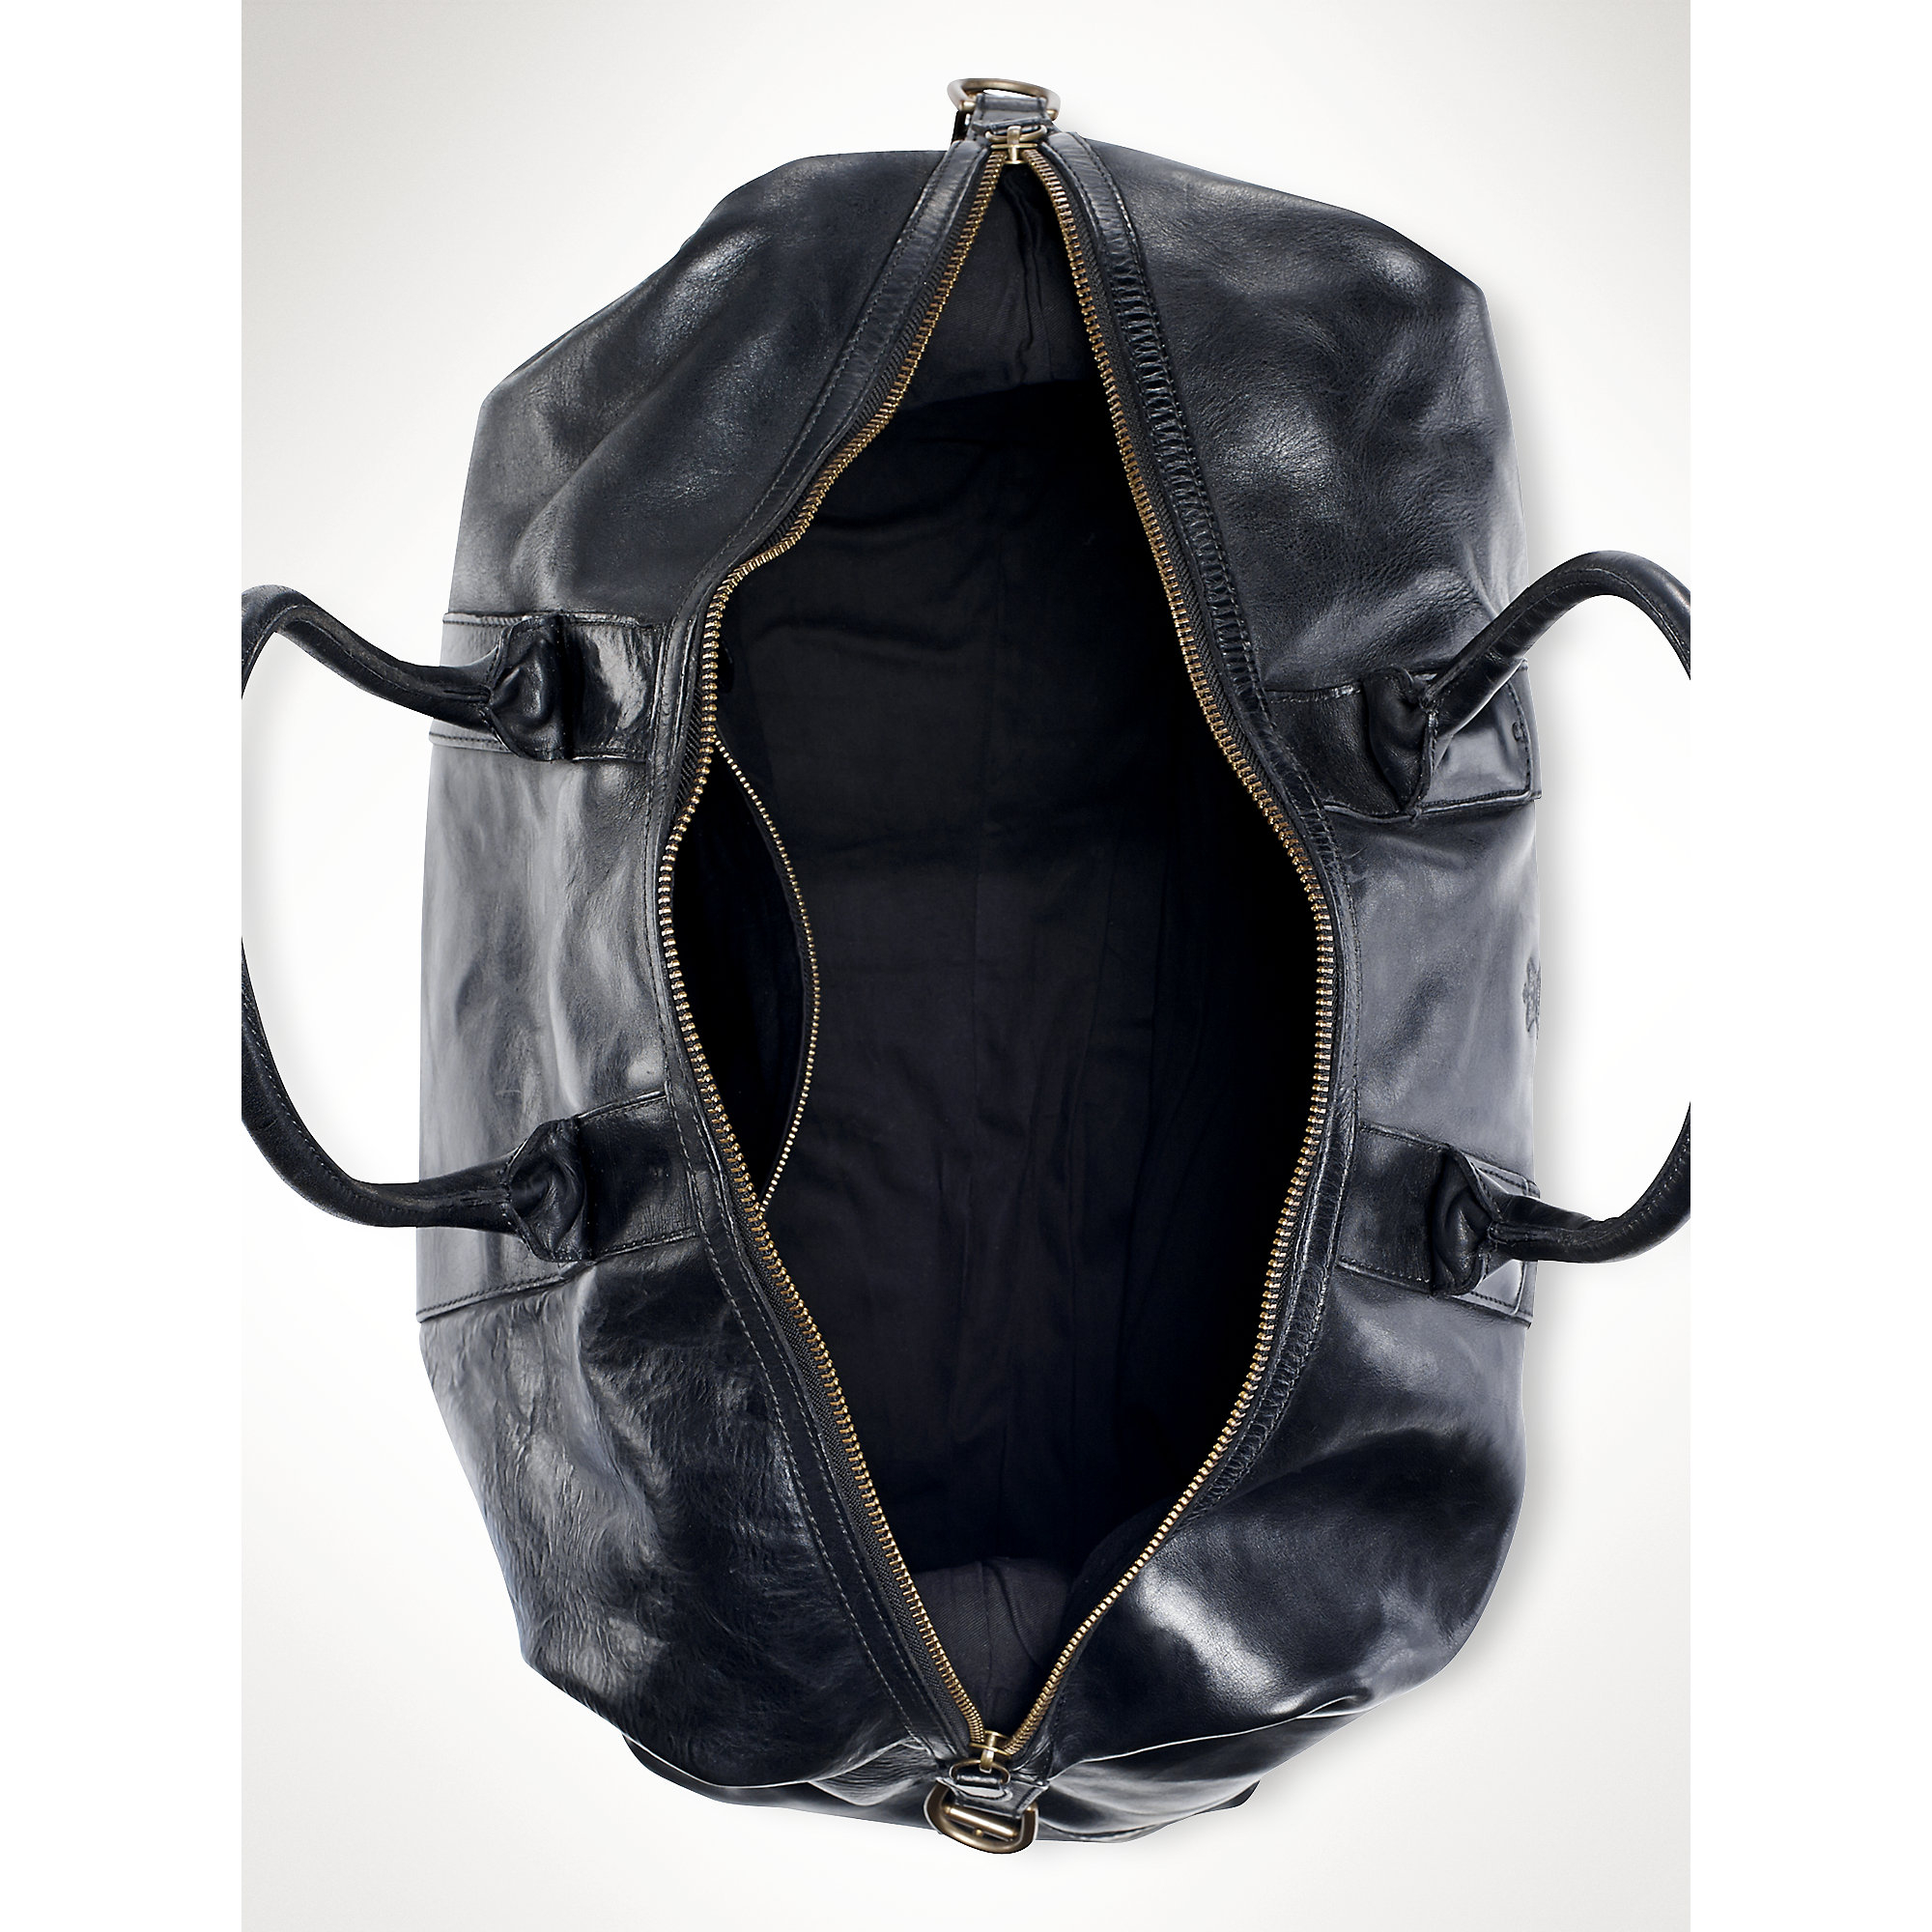 Polo Ralph Lauren Leather Duffel Bag in Black for Men - Lyst